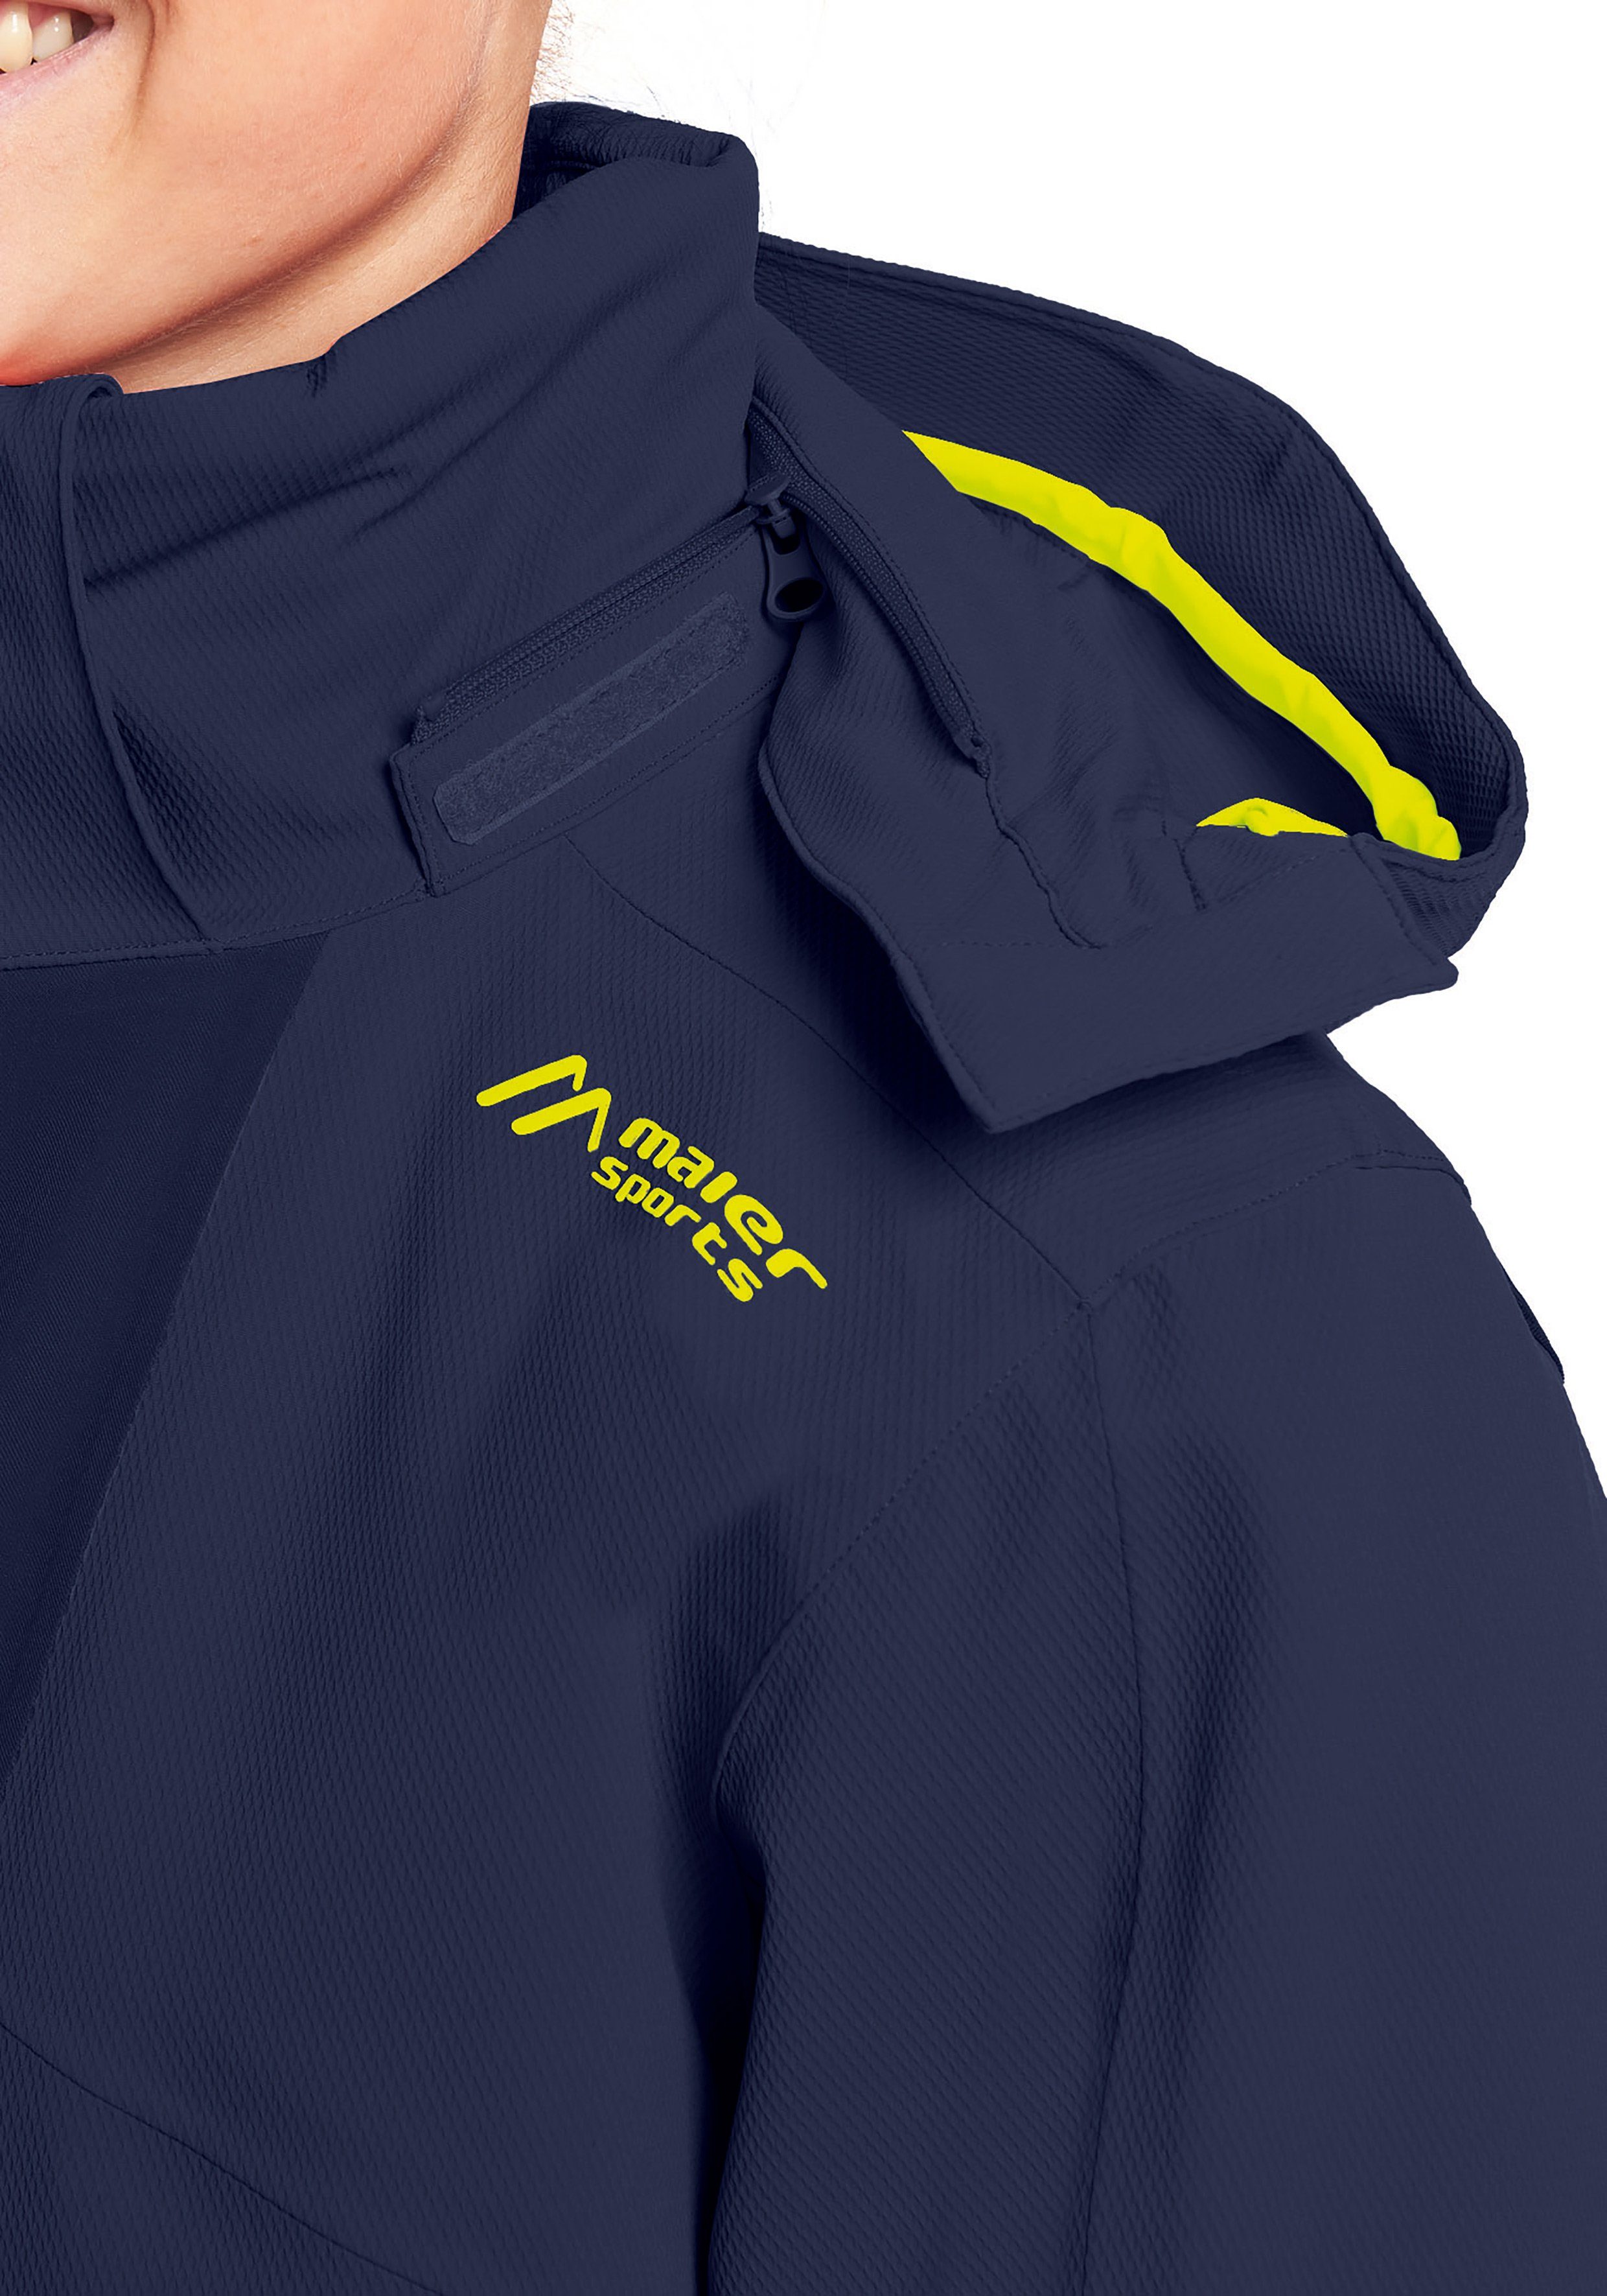 Maier Sports Skijacke Fast Impulse Piste für W Freeride Modern und designte dunkelblau perfekt – Skijacke